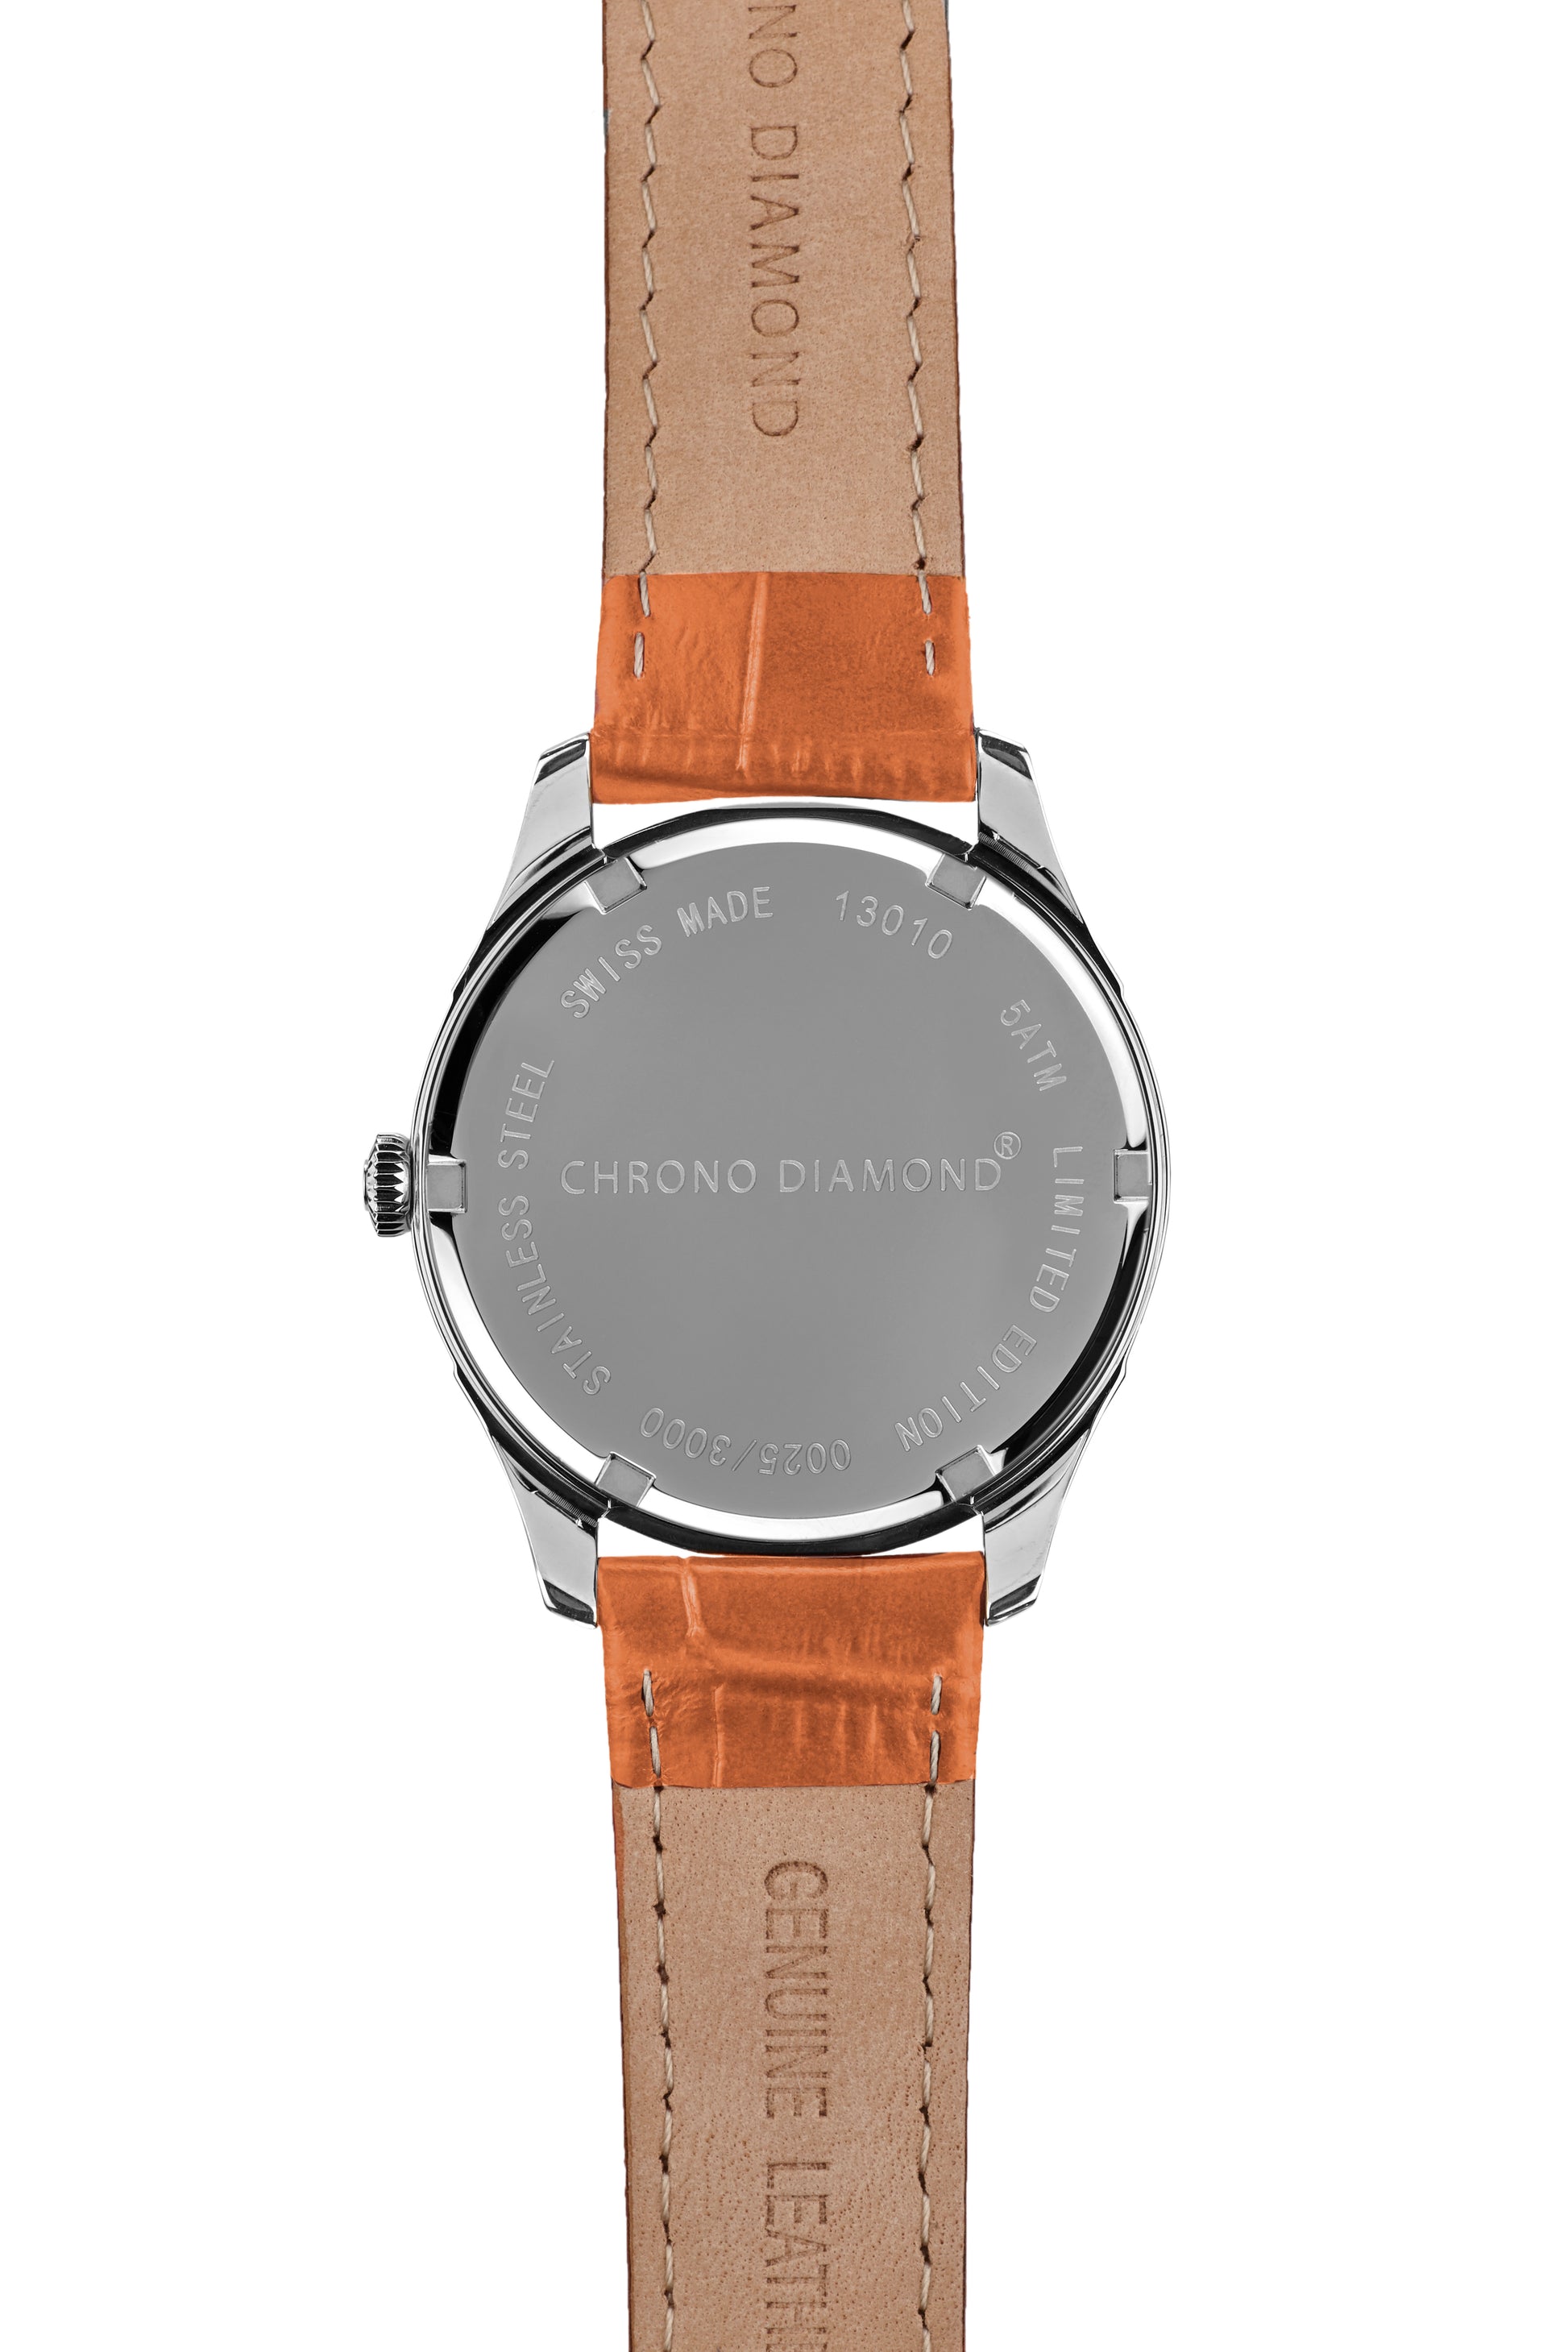 Automatic watches — Skylla — Chrono Diamond — steel orange